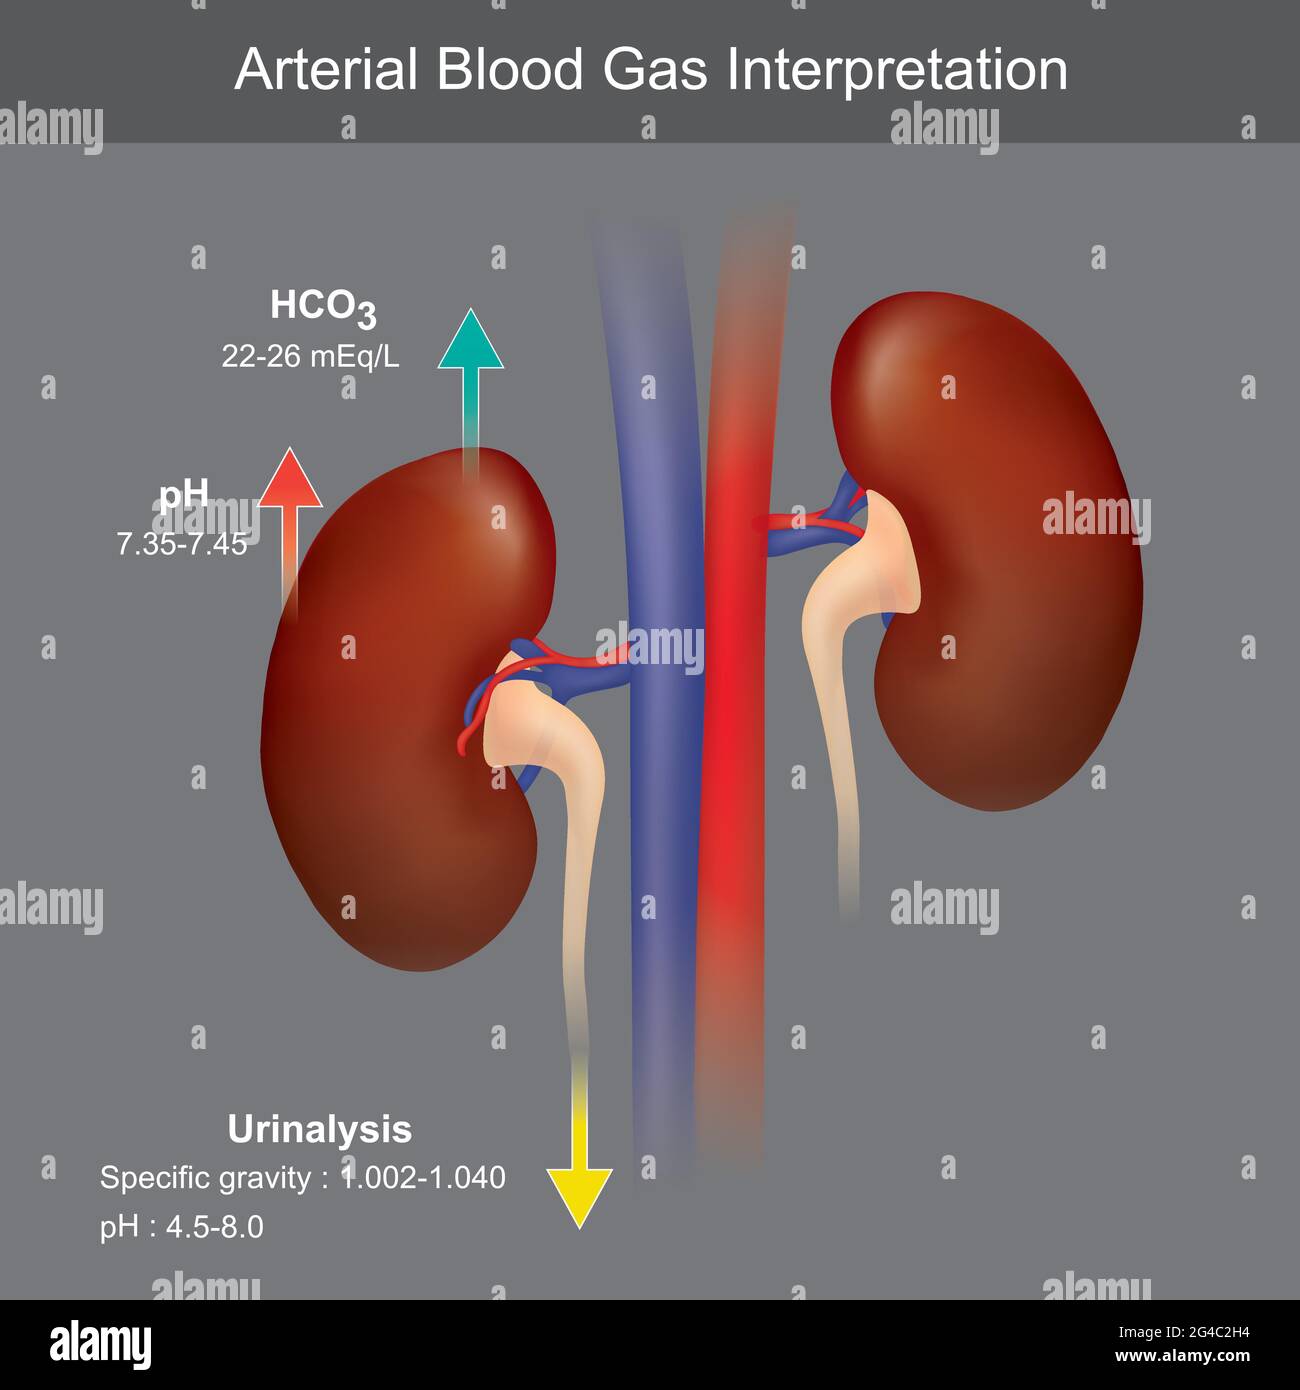 Arterial Blood Gas Interpretation Stock Vector